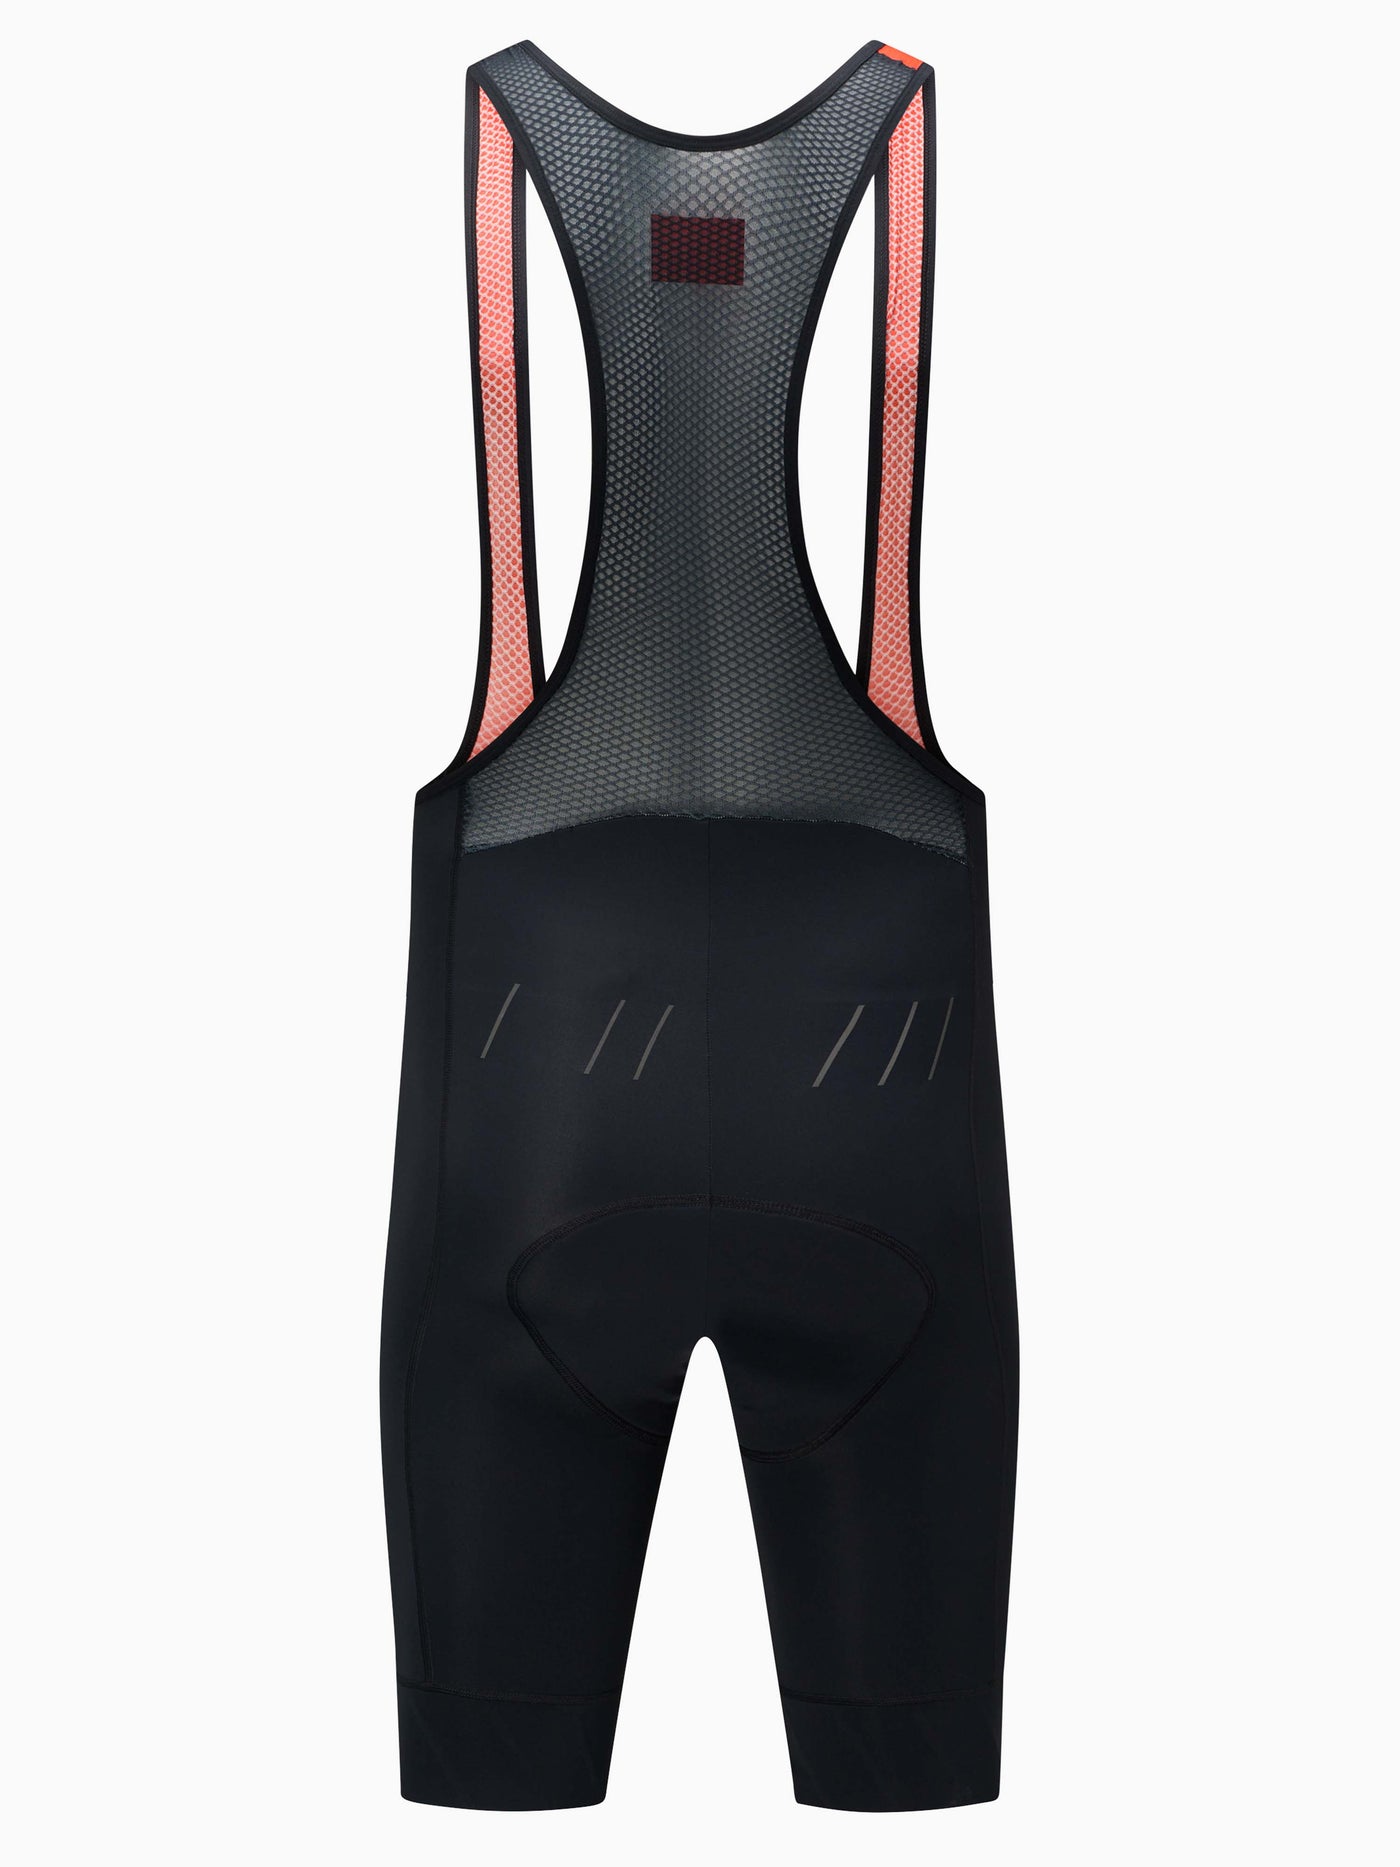 CHPT3 men's Grand Tour Bib shorts, in Carbon black viewed from back#color_carbon-black